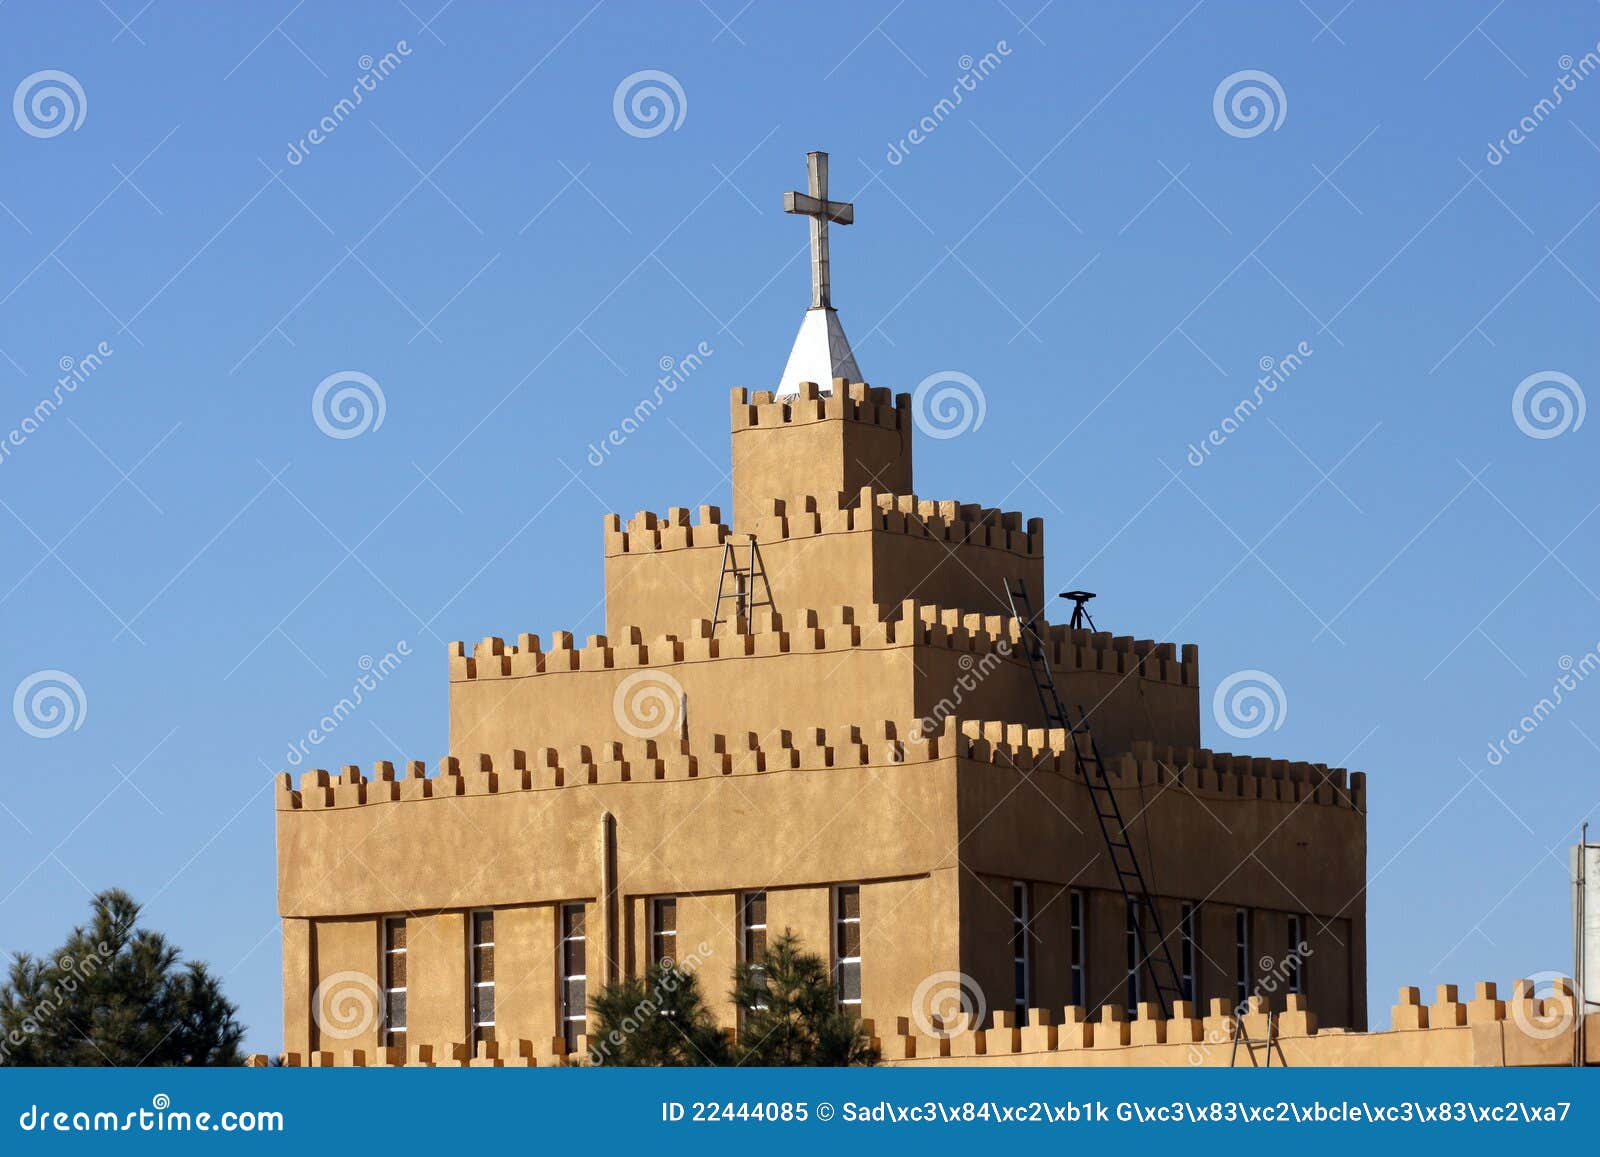 st. joseph church in iraq.